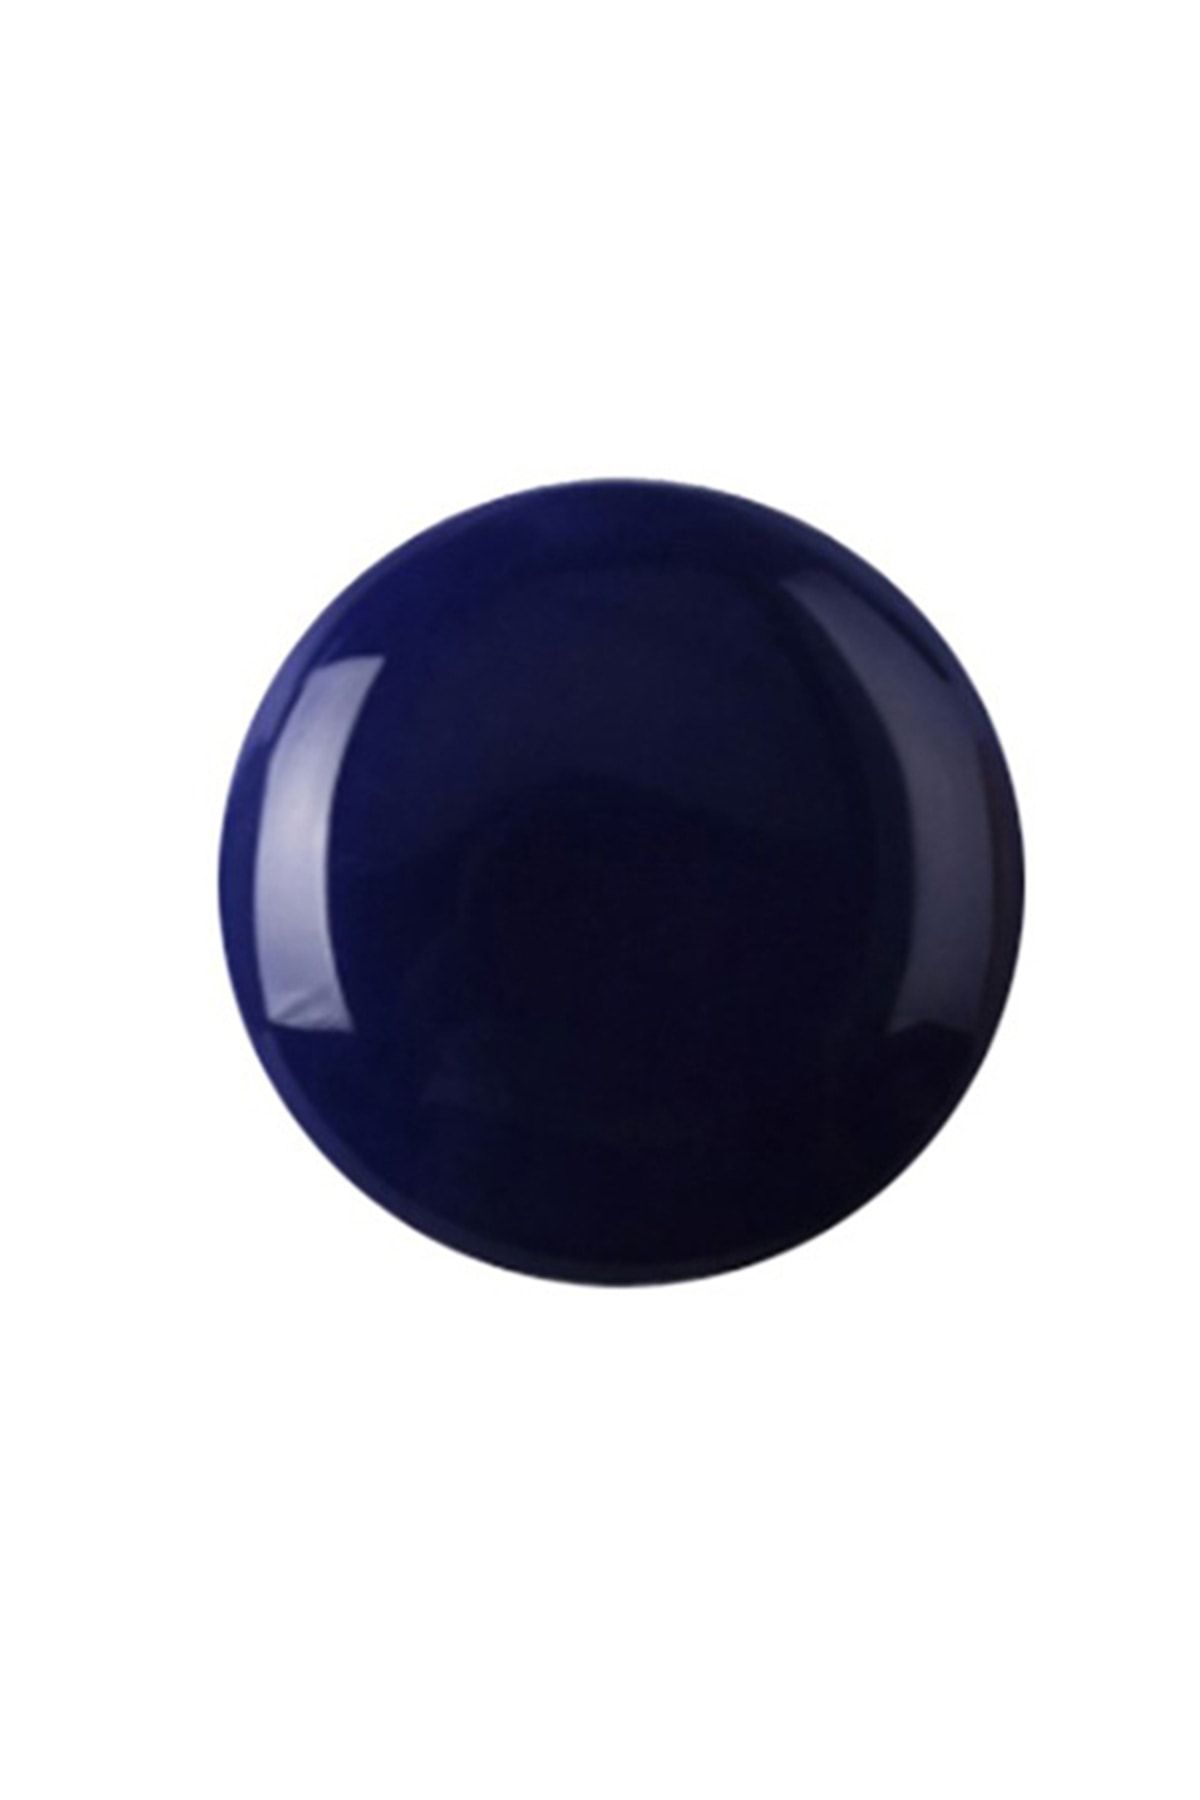 Refsan Renkli Hazır Seramik Sır 351-5 Alümina Mavi (1050 °C) - 250 ml (YOĞUN)